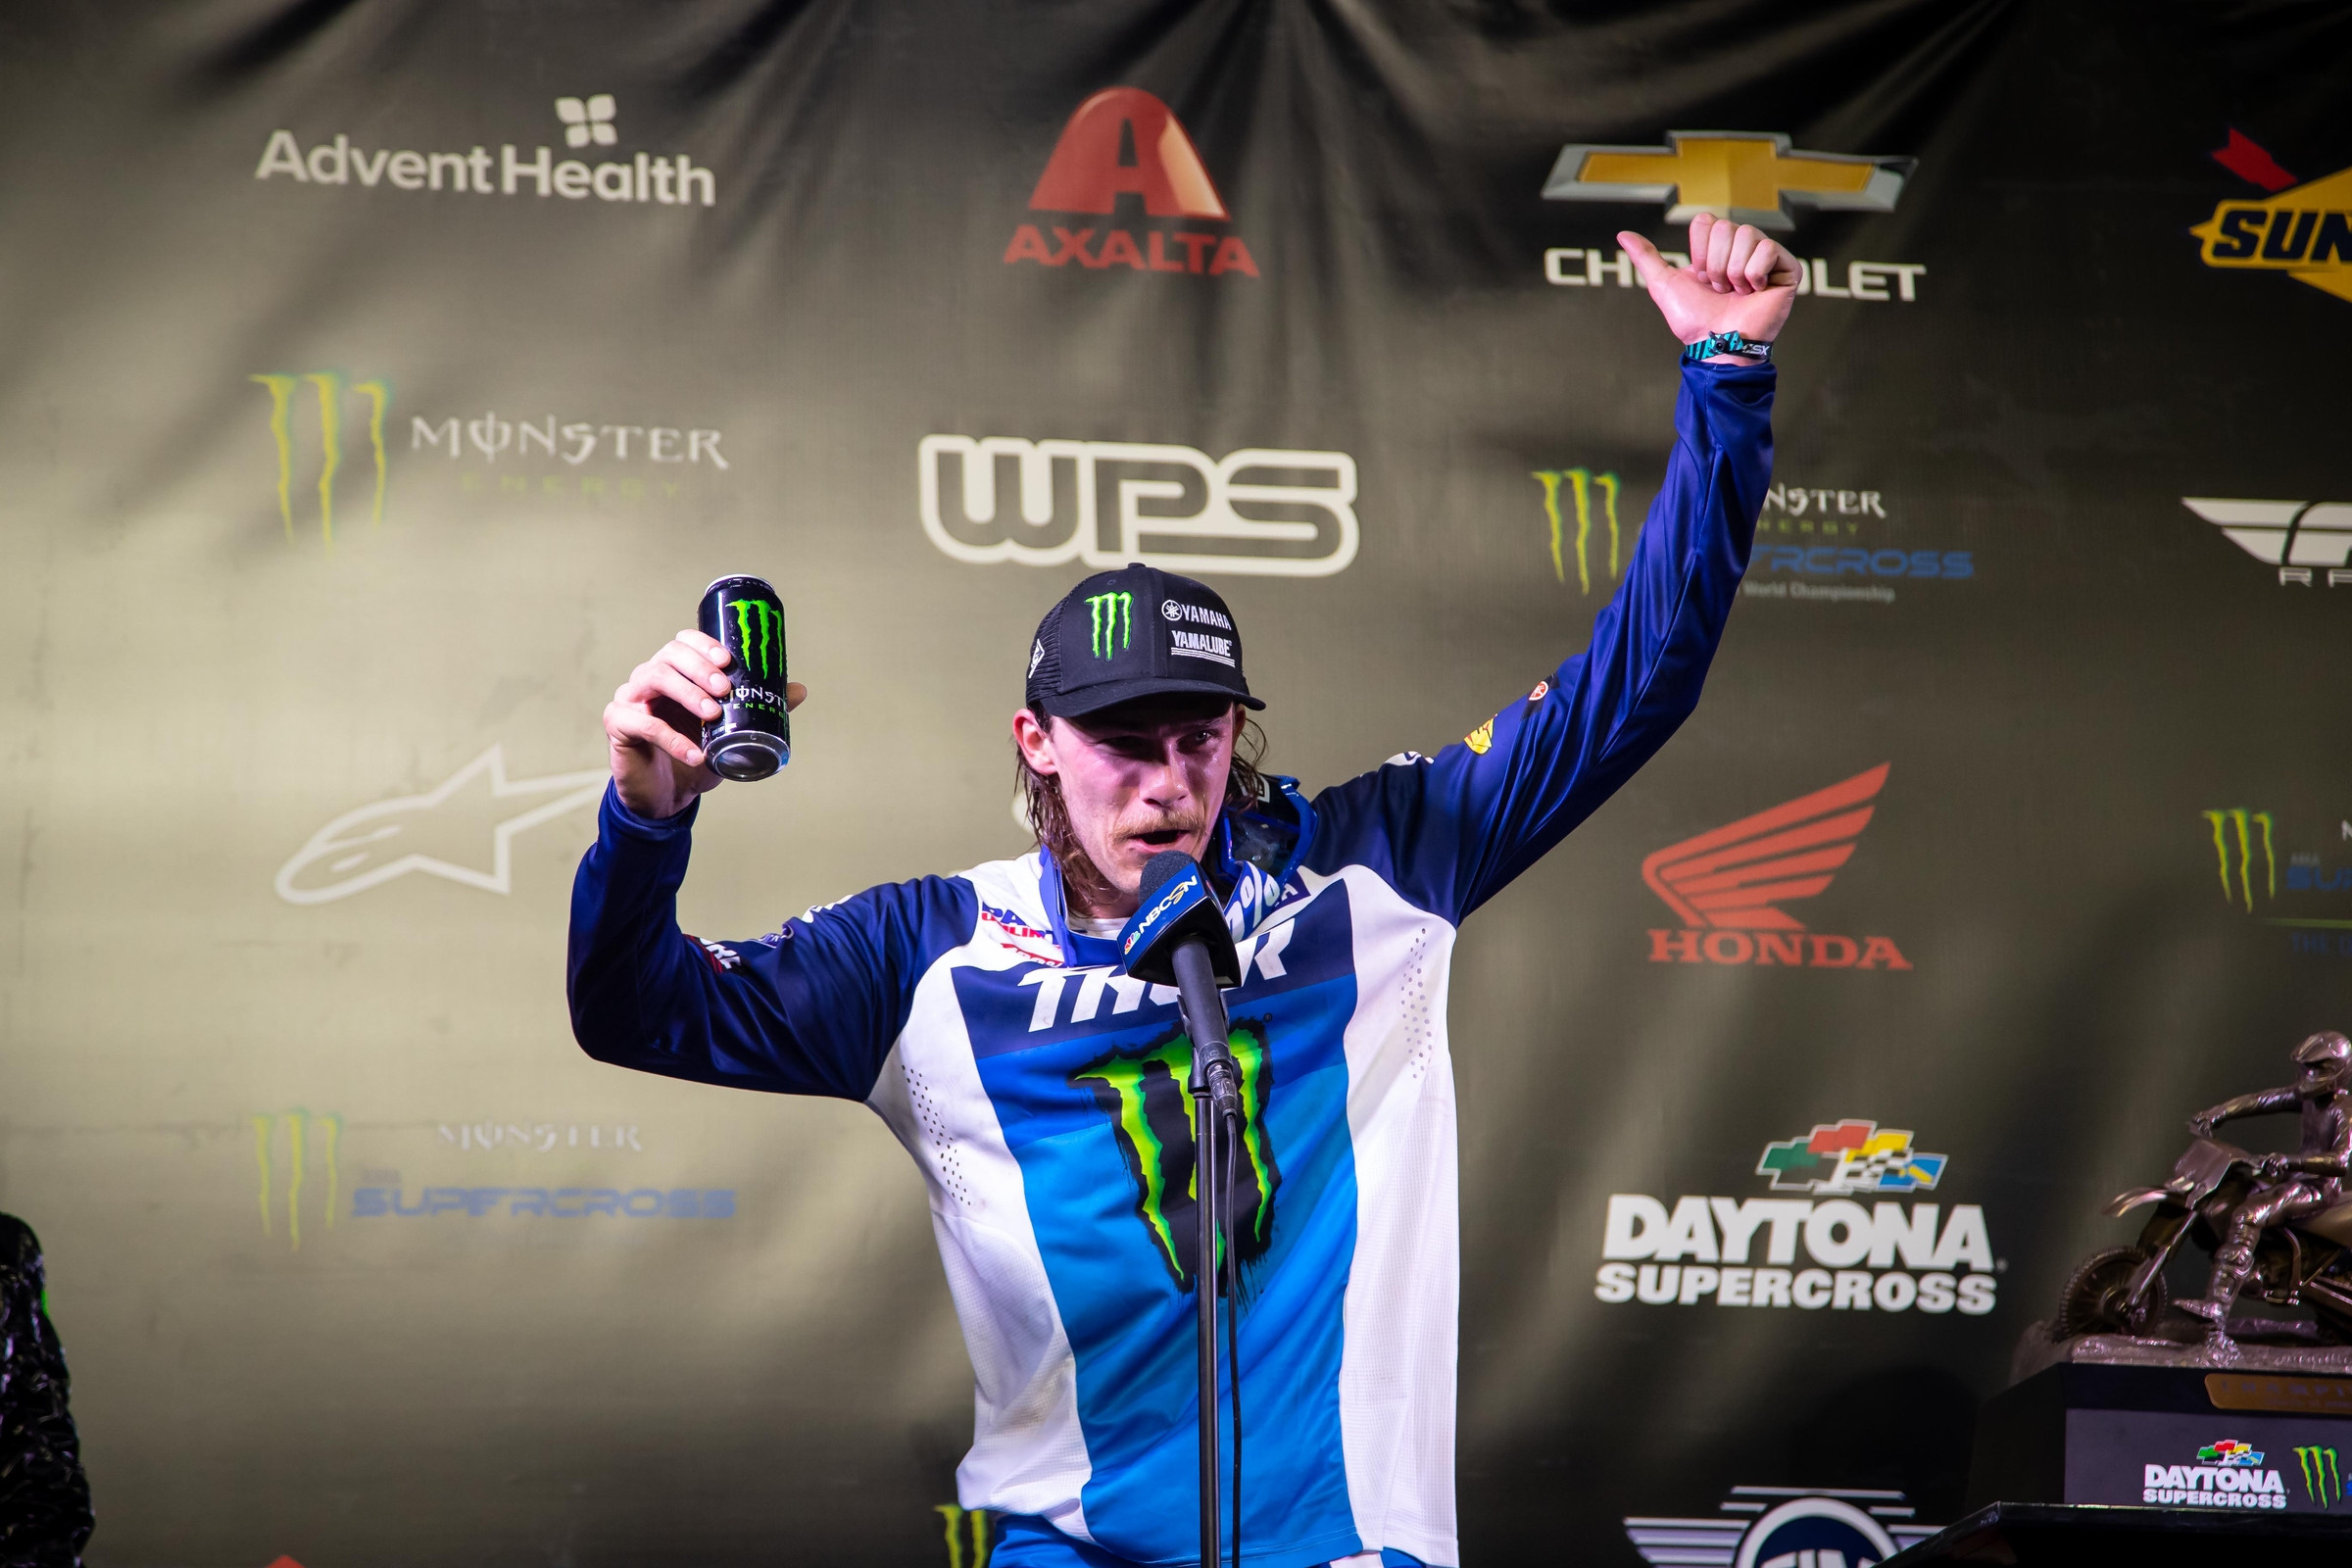 Podium Finishers Talk About 2021 Daytona Supercross - Racer X